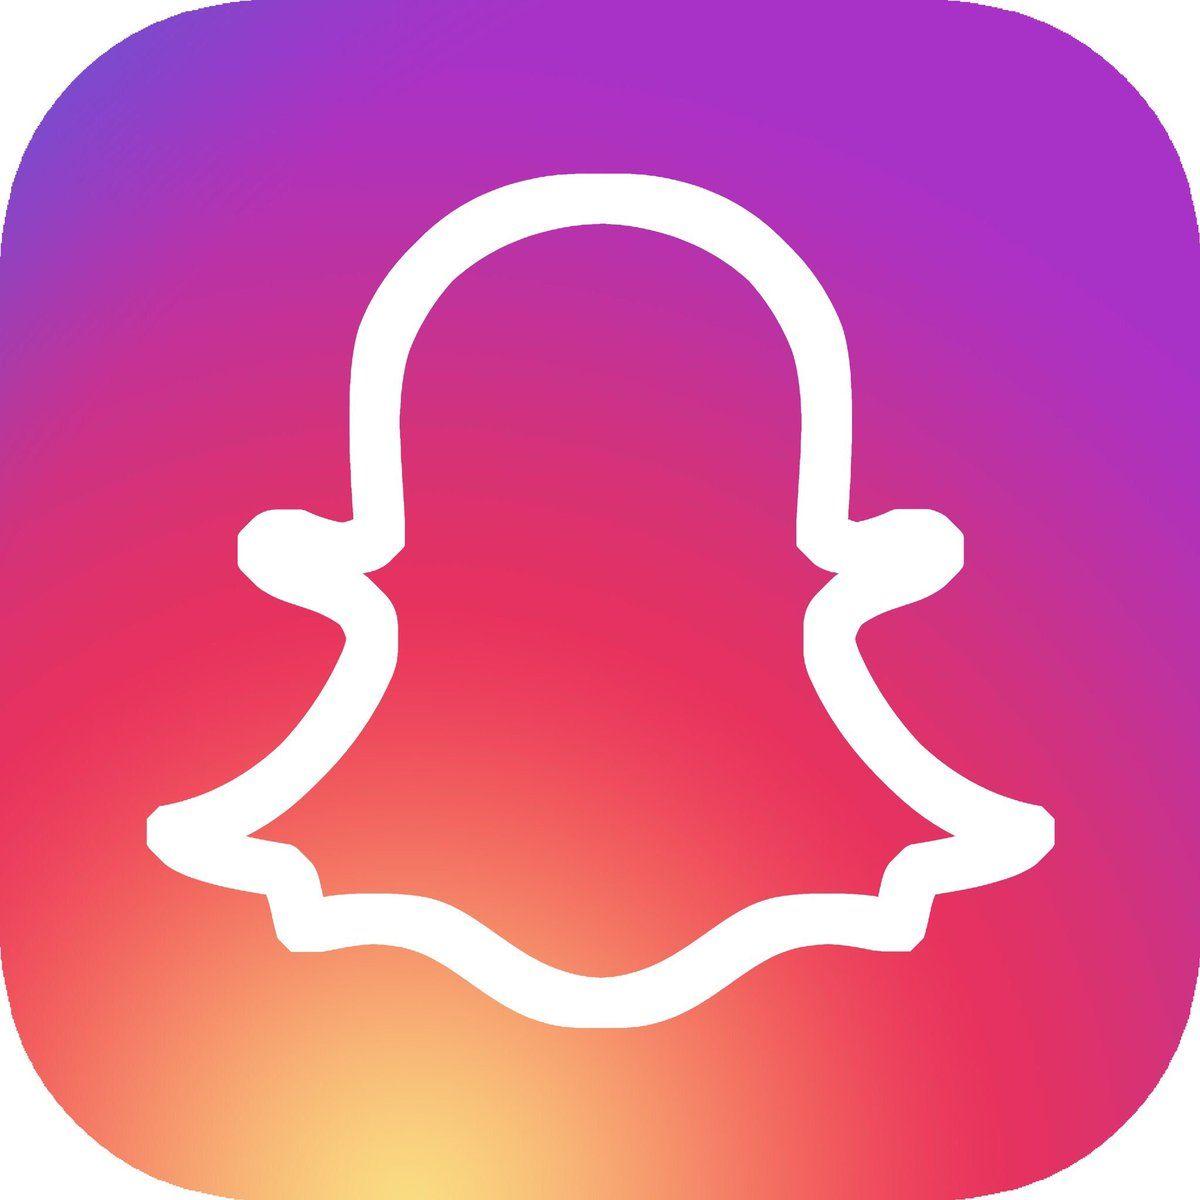 New Instagram Logo - Jaehross everybody seen the new Instagram logo